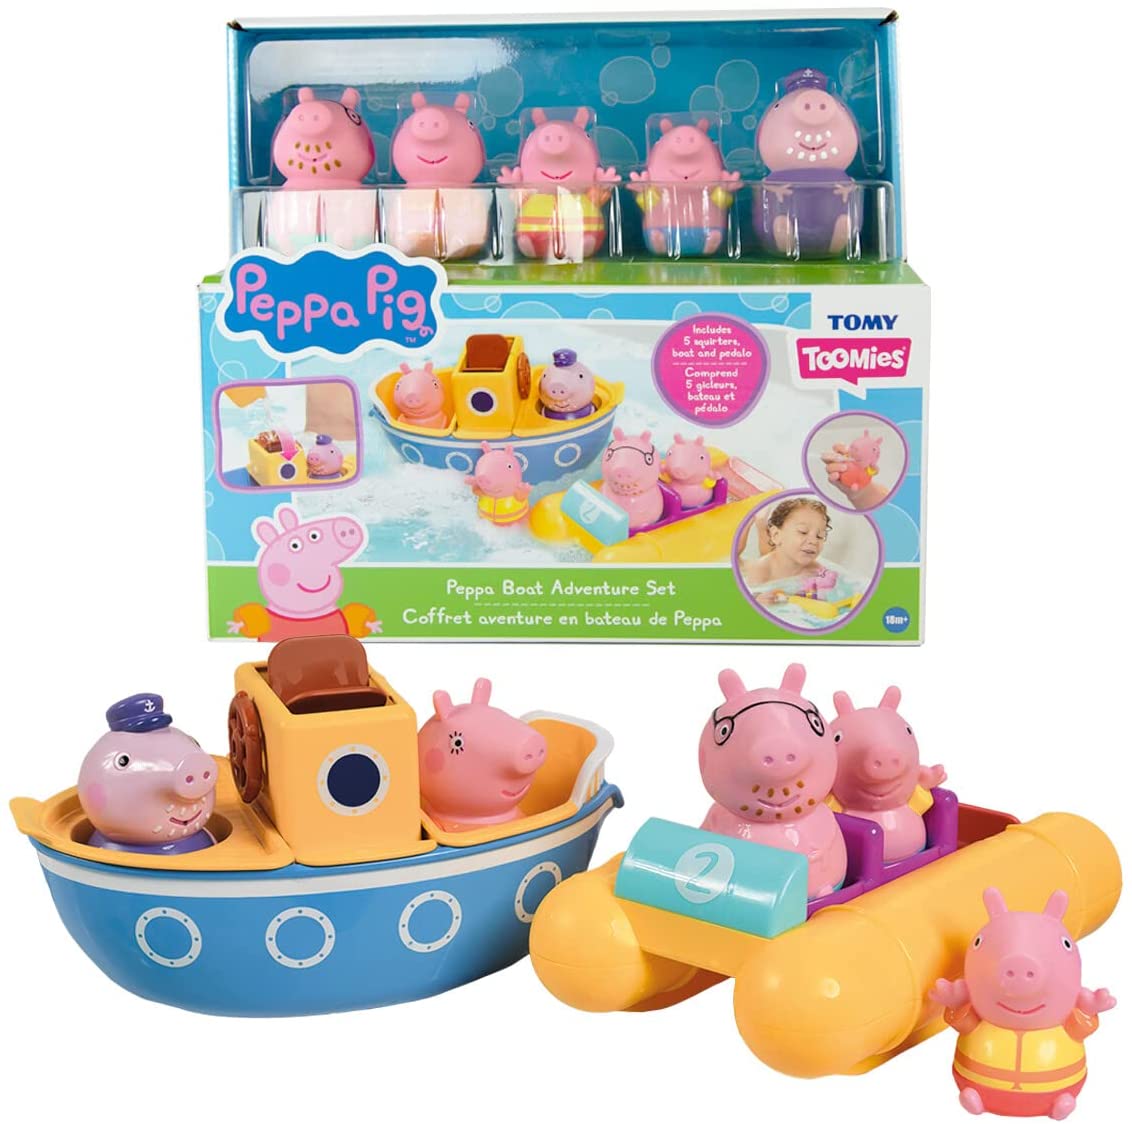 TOMY Toomies Peppa Pig Bath Toys 